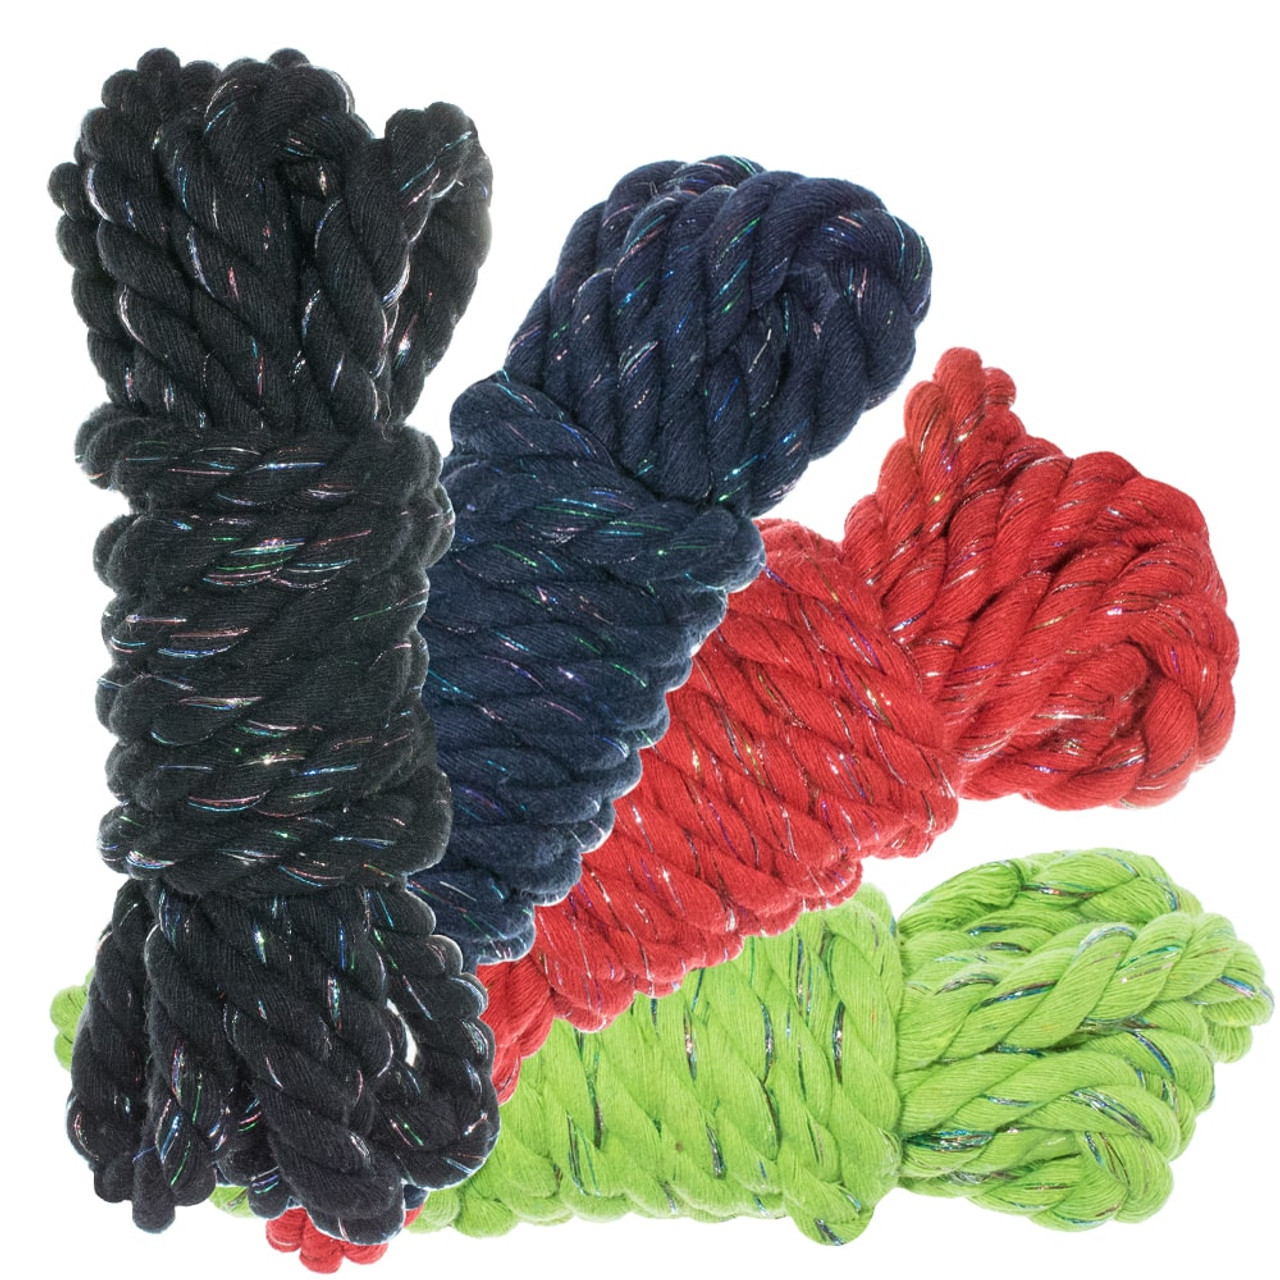 1/2 Twisted Cotton Rope 100' Kit - USA